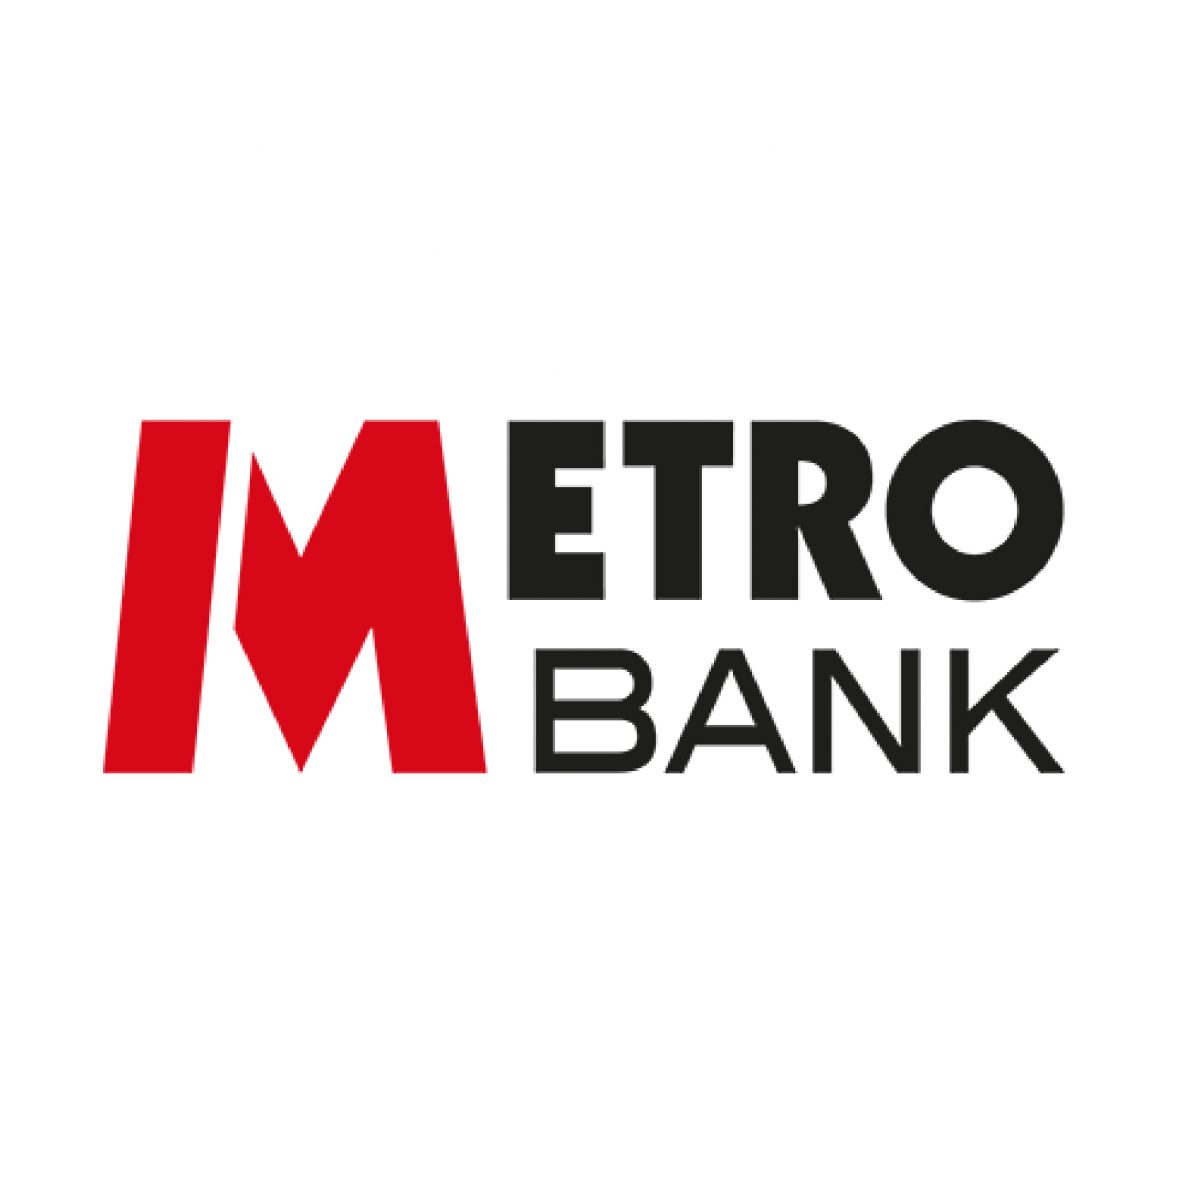 метро банк